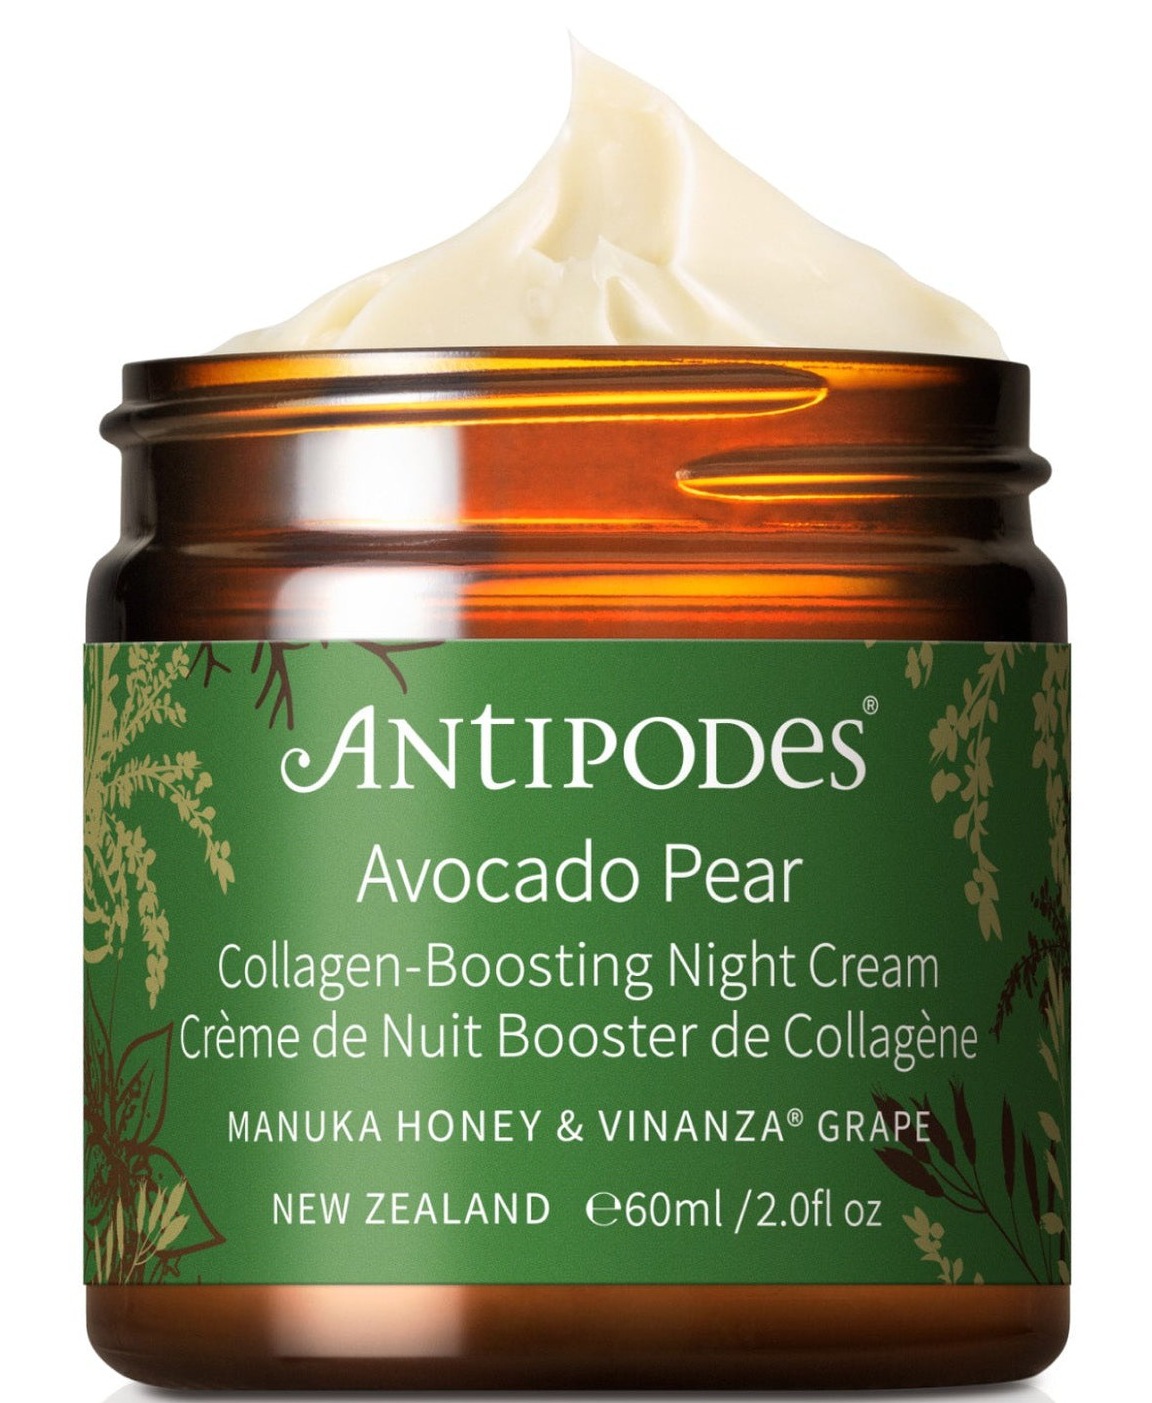 Antipodes Avocado Pear Collagen-boosting Night Cream